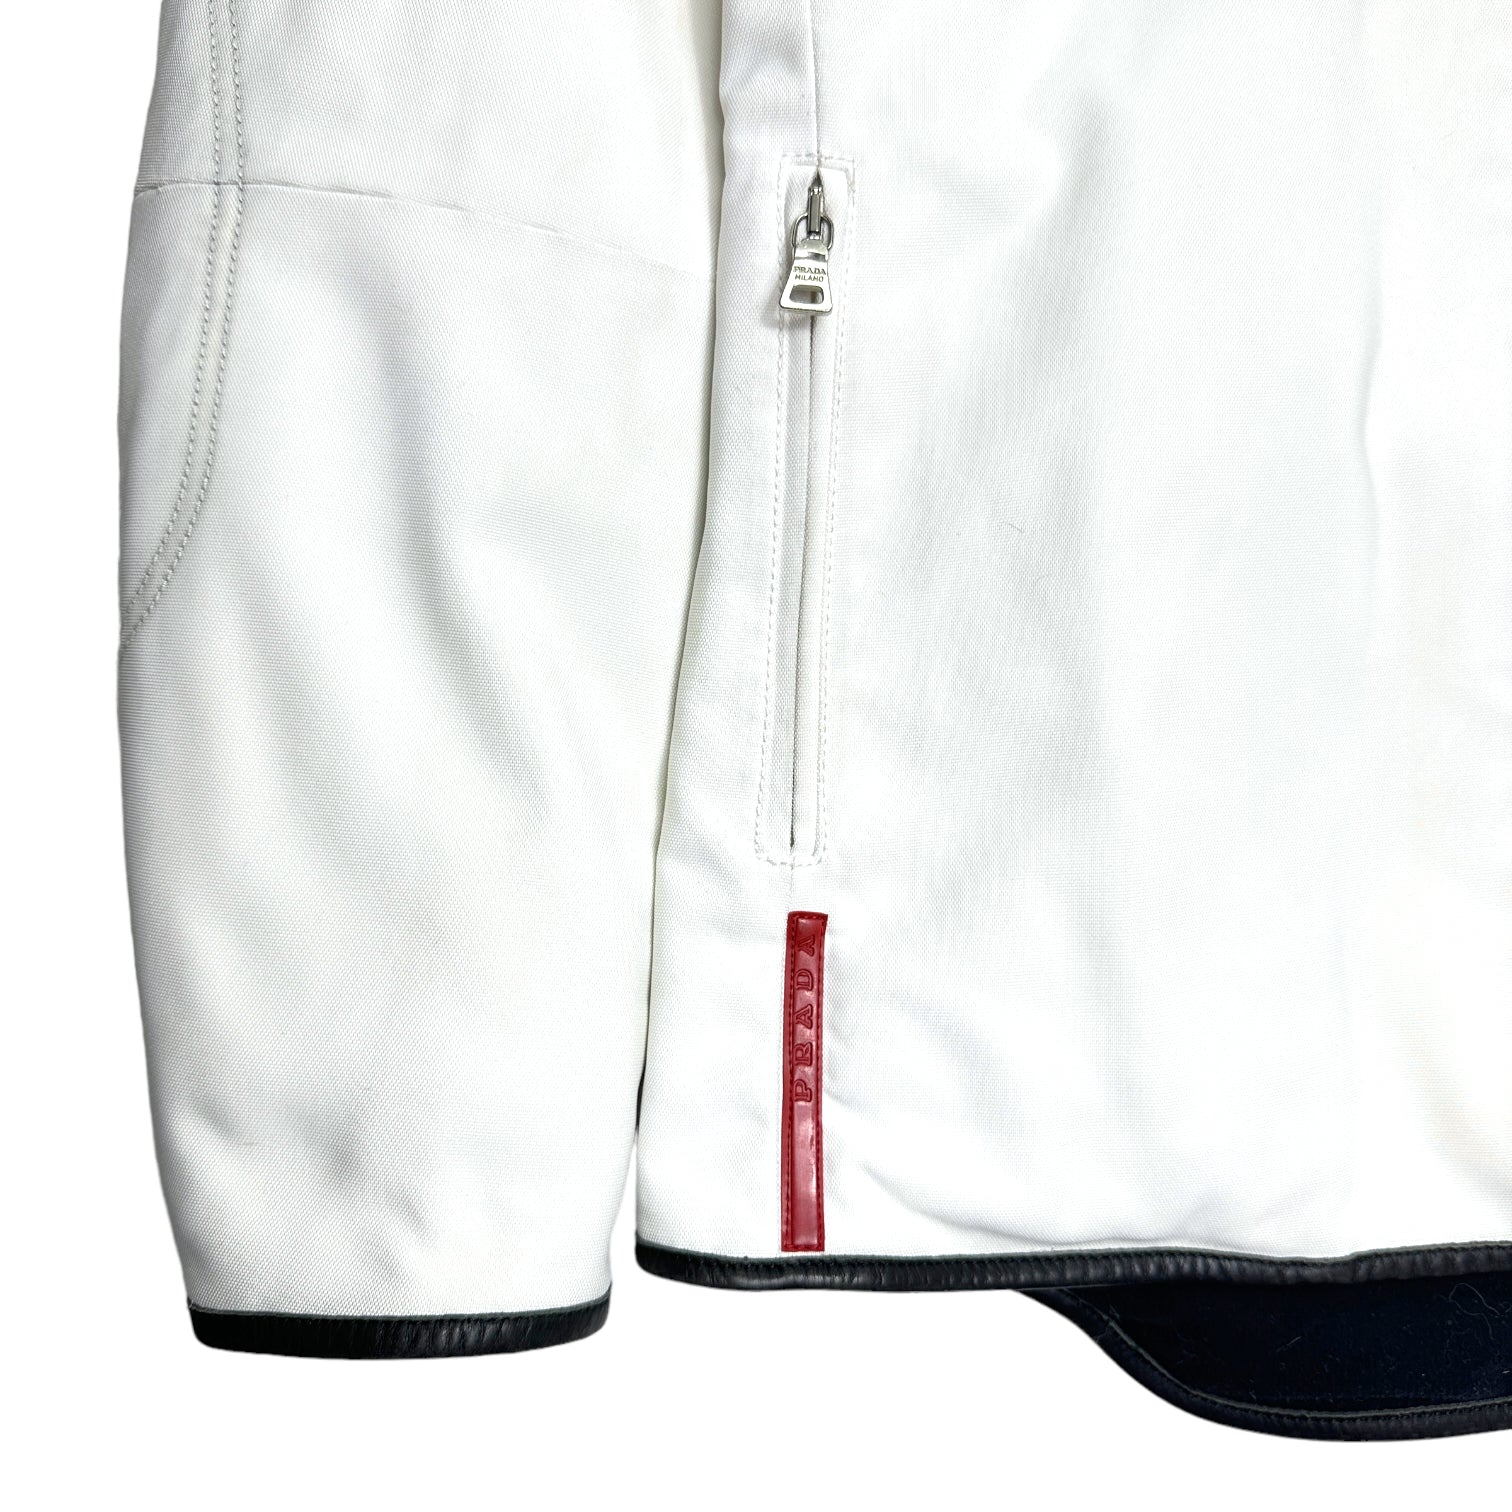 AW99' Prada Sport Pure White Balaclava Jacket - Small / Medium